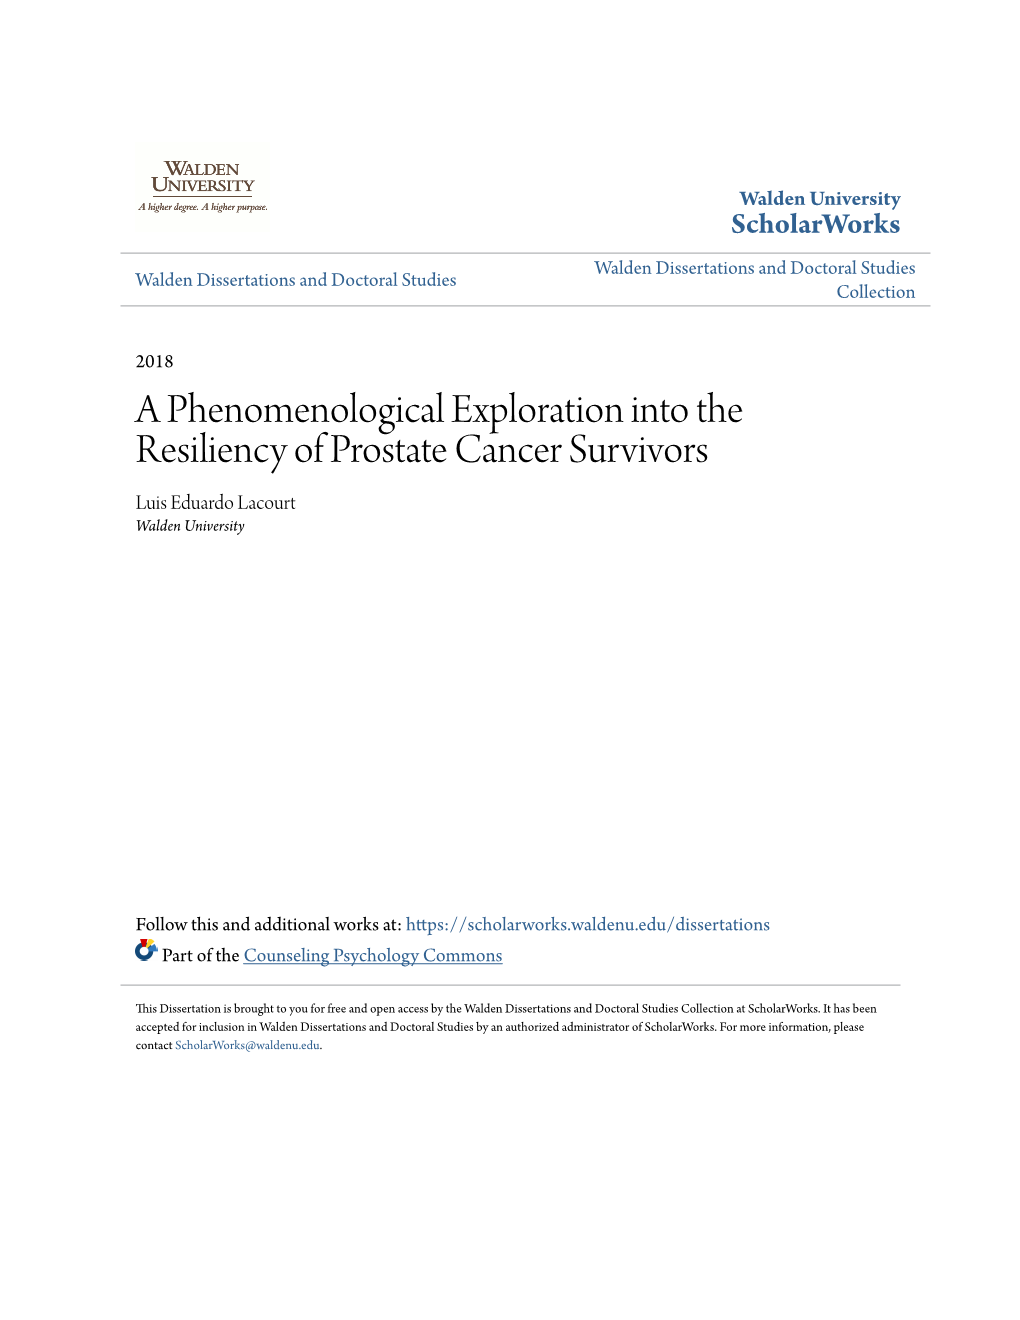 A Phenomenological Exploration Into the Resiliency of Prostate Cancer Survivors Luis Eduardo Lacourt Walden University